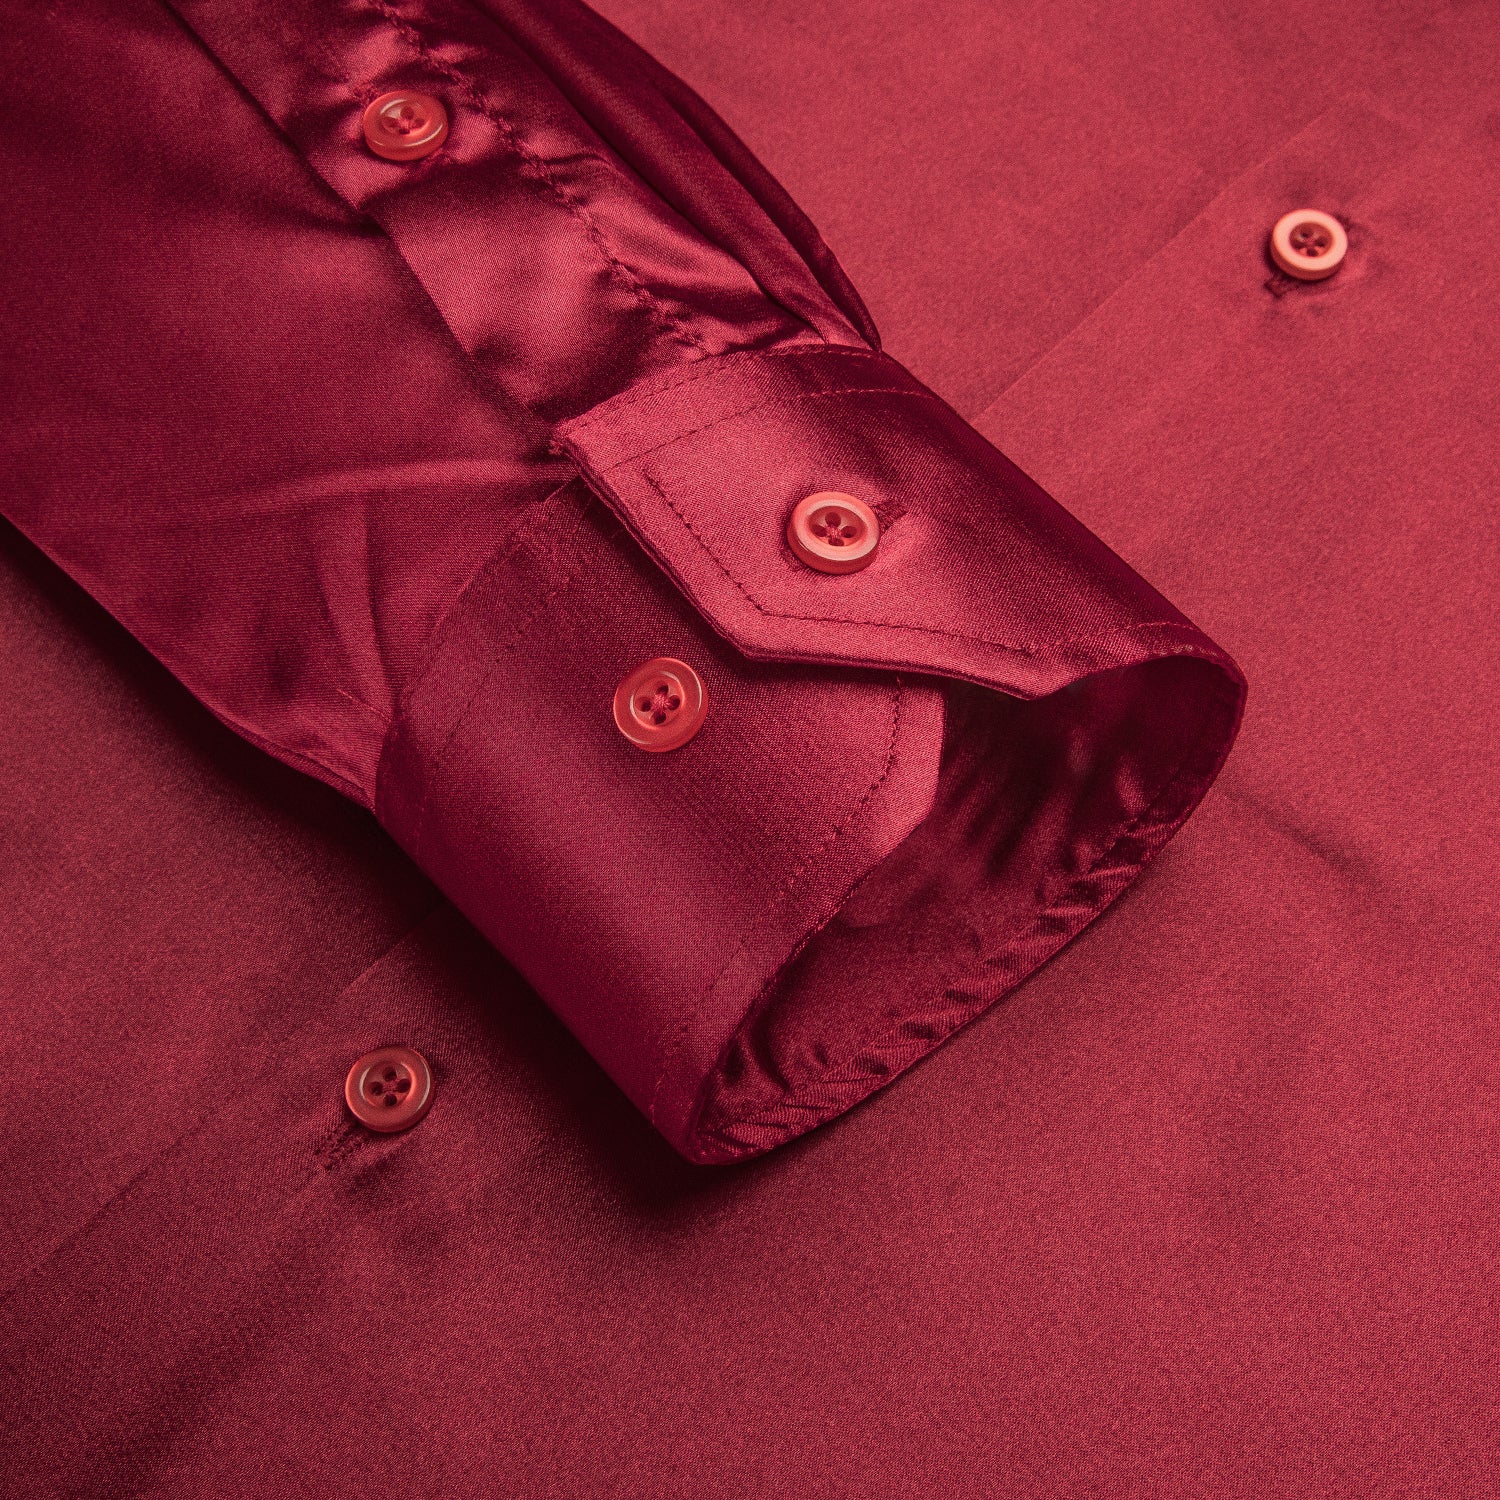 Burgundy Red Solid Satin Silk Men's Long Sleeve Dress Shirt